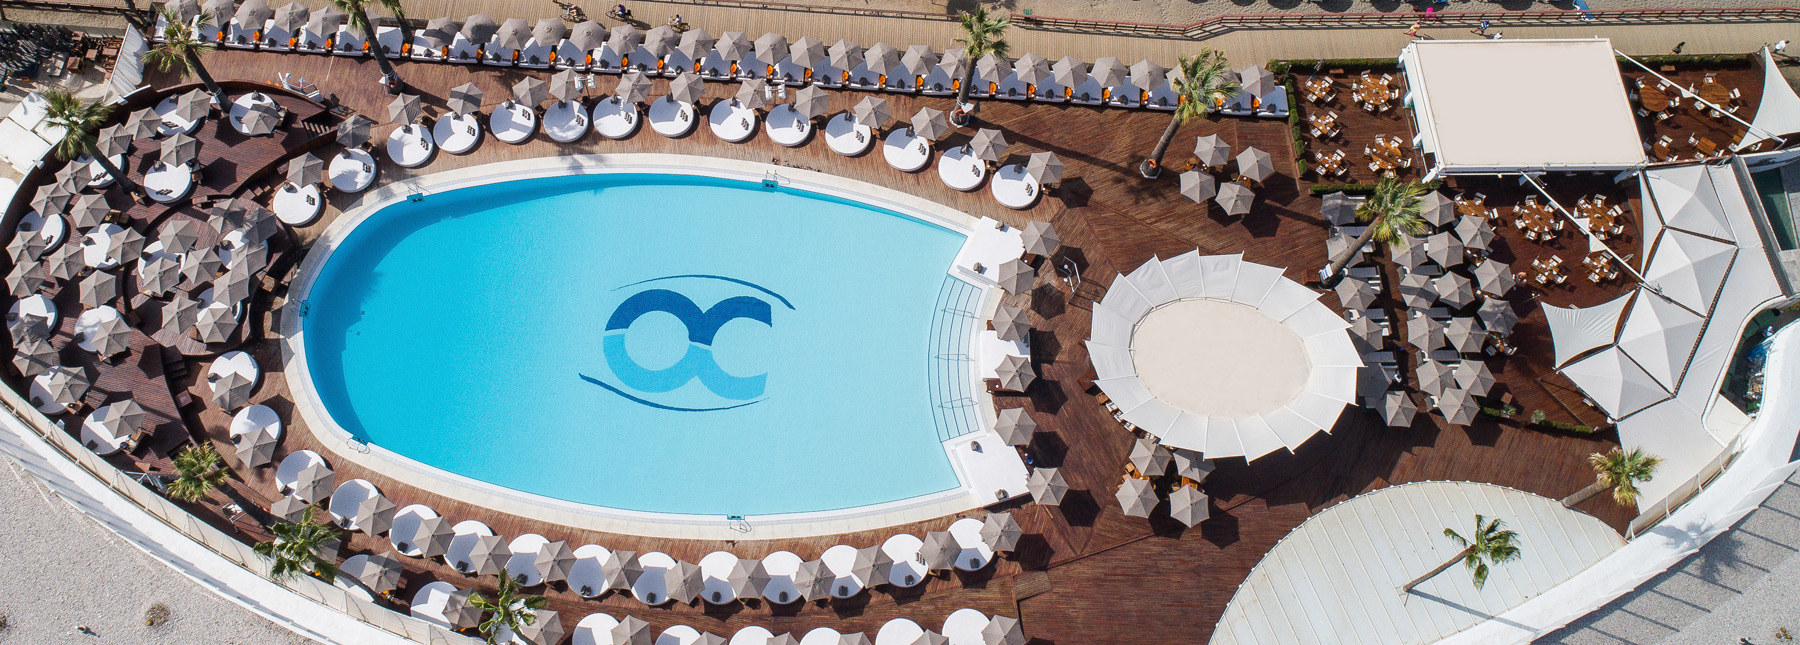 Ocean Club Beach Club Marbella  Puerto Banus Beach Club With Pool